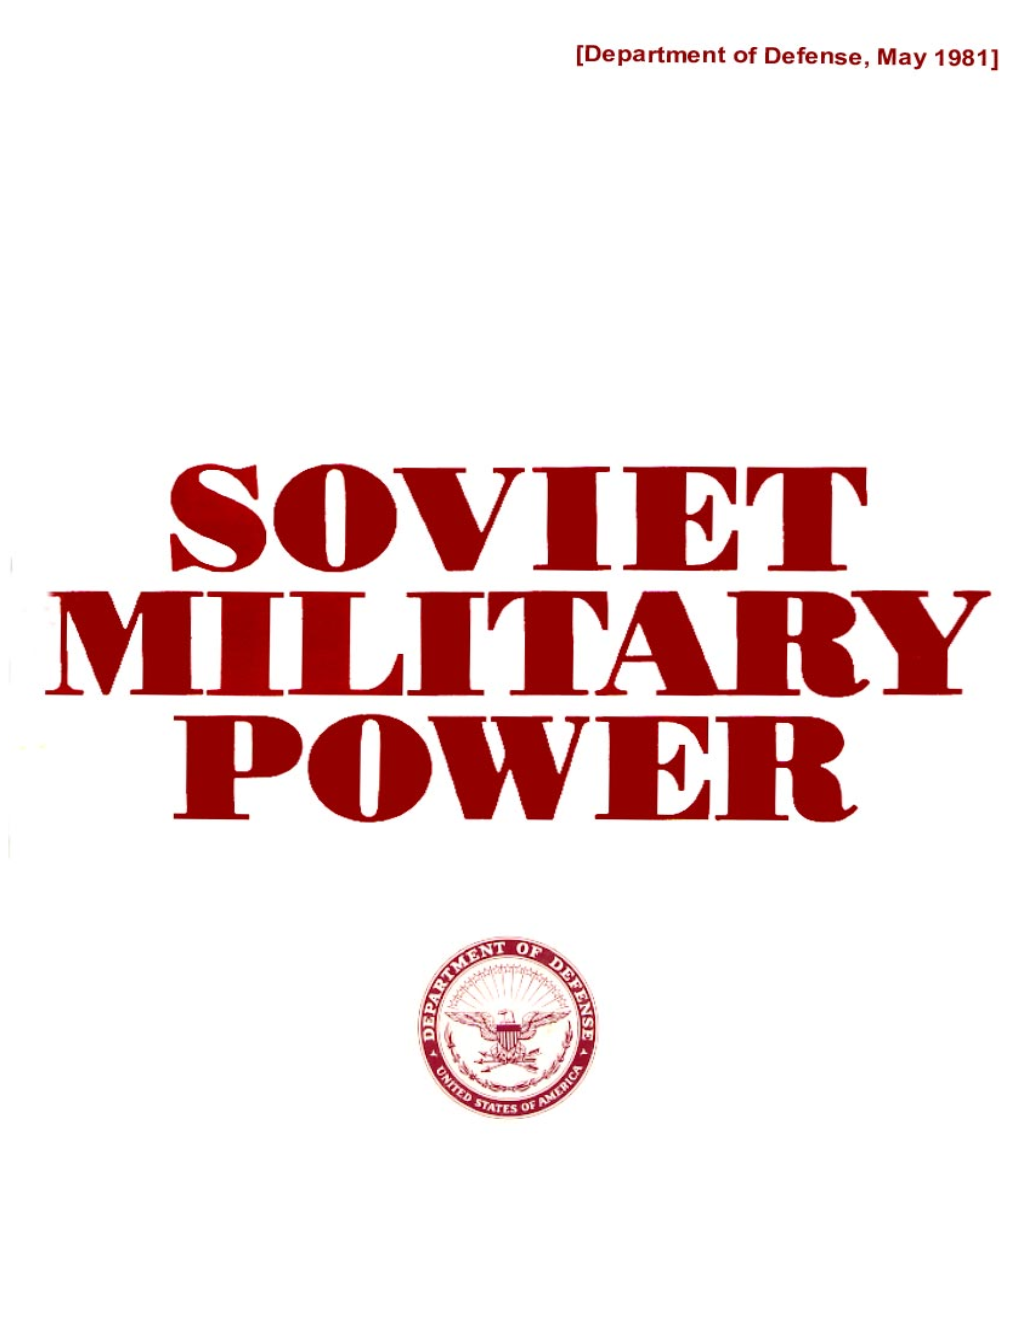 Soviet Military Power 1981.P65